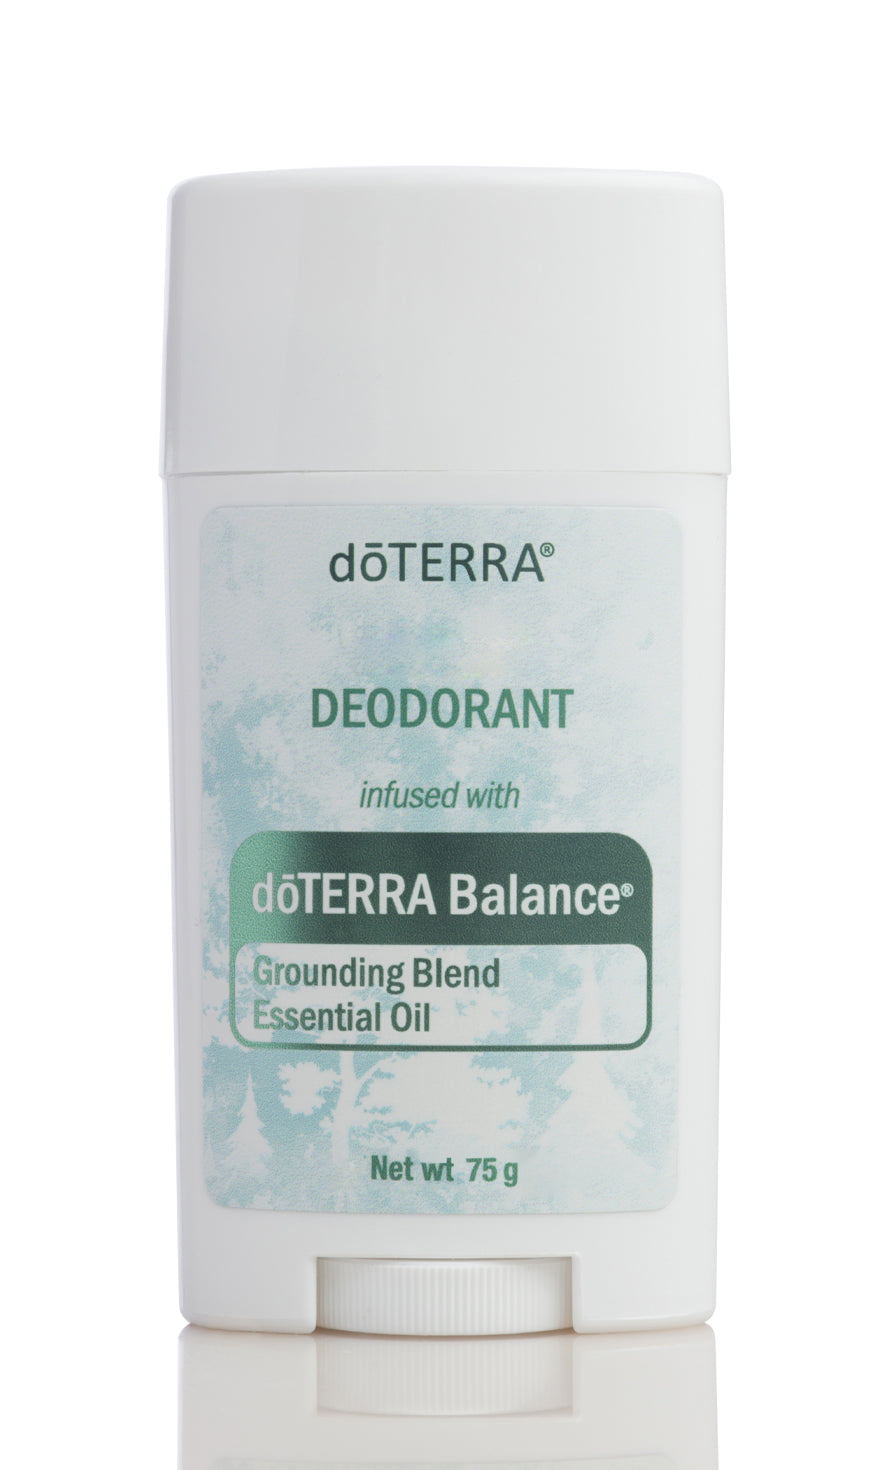 Doterra Balance Essential Oil Deodorant stick